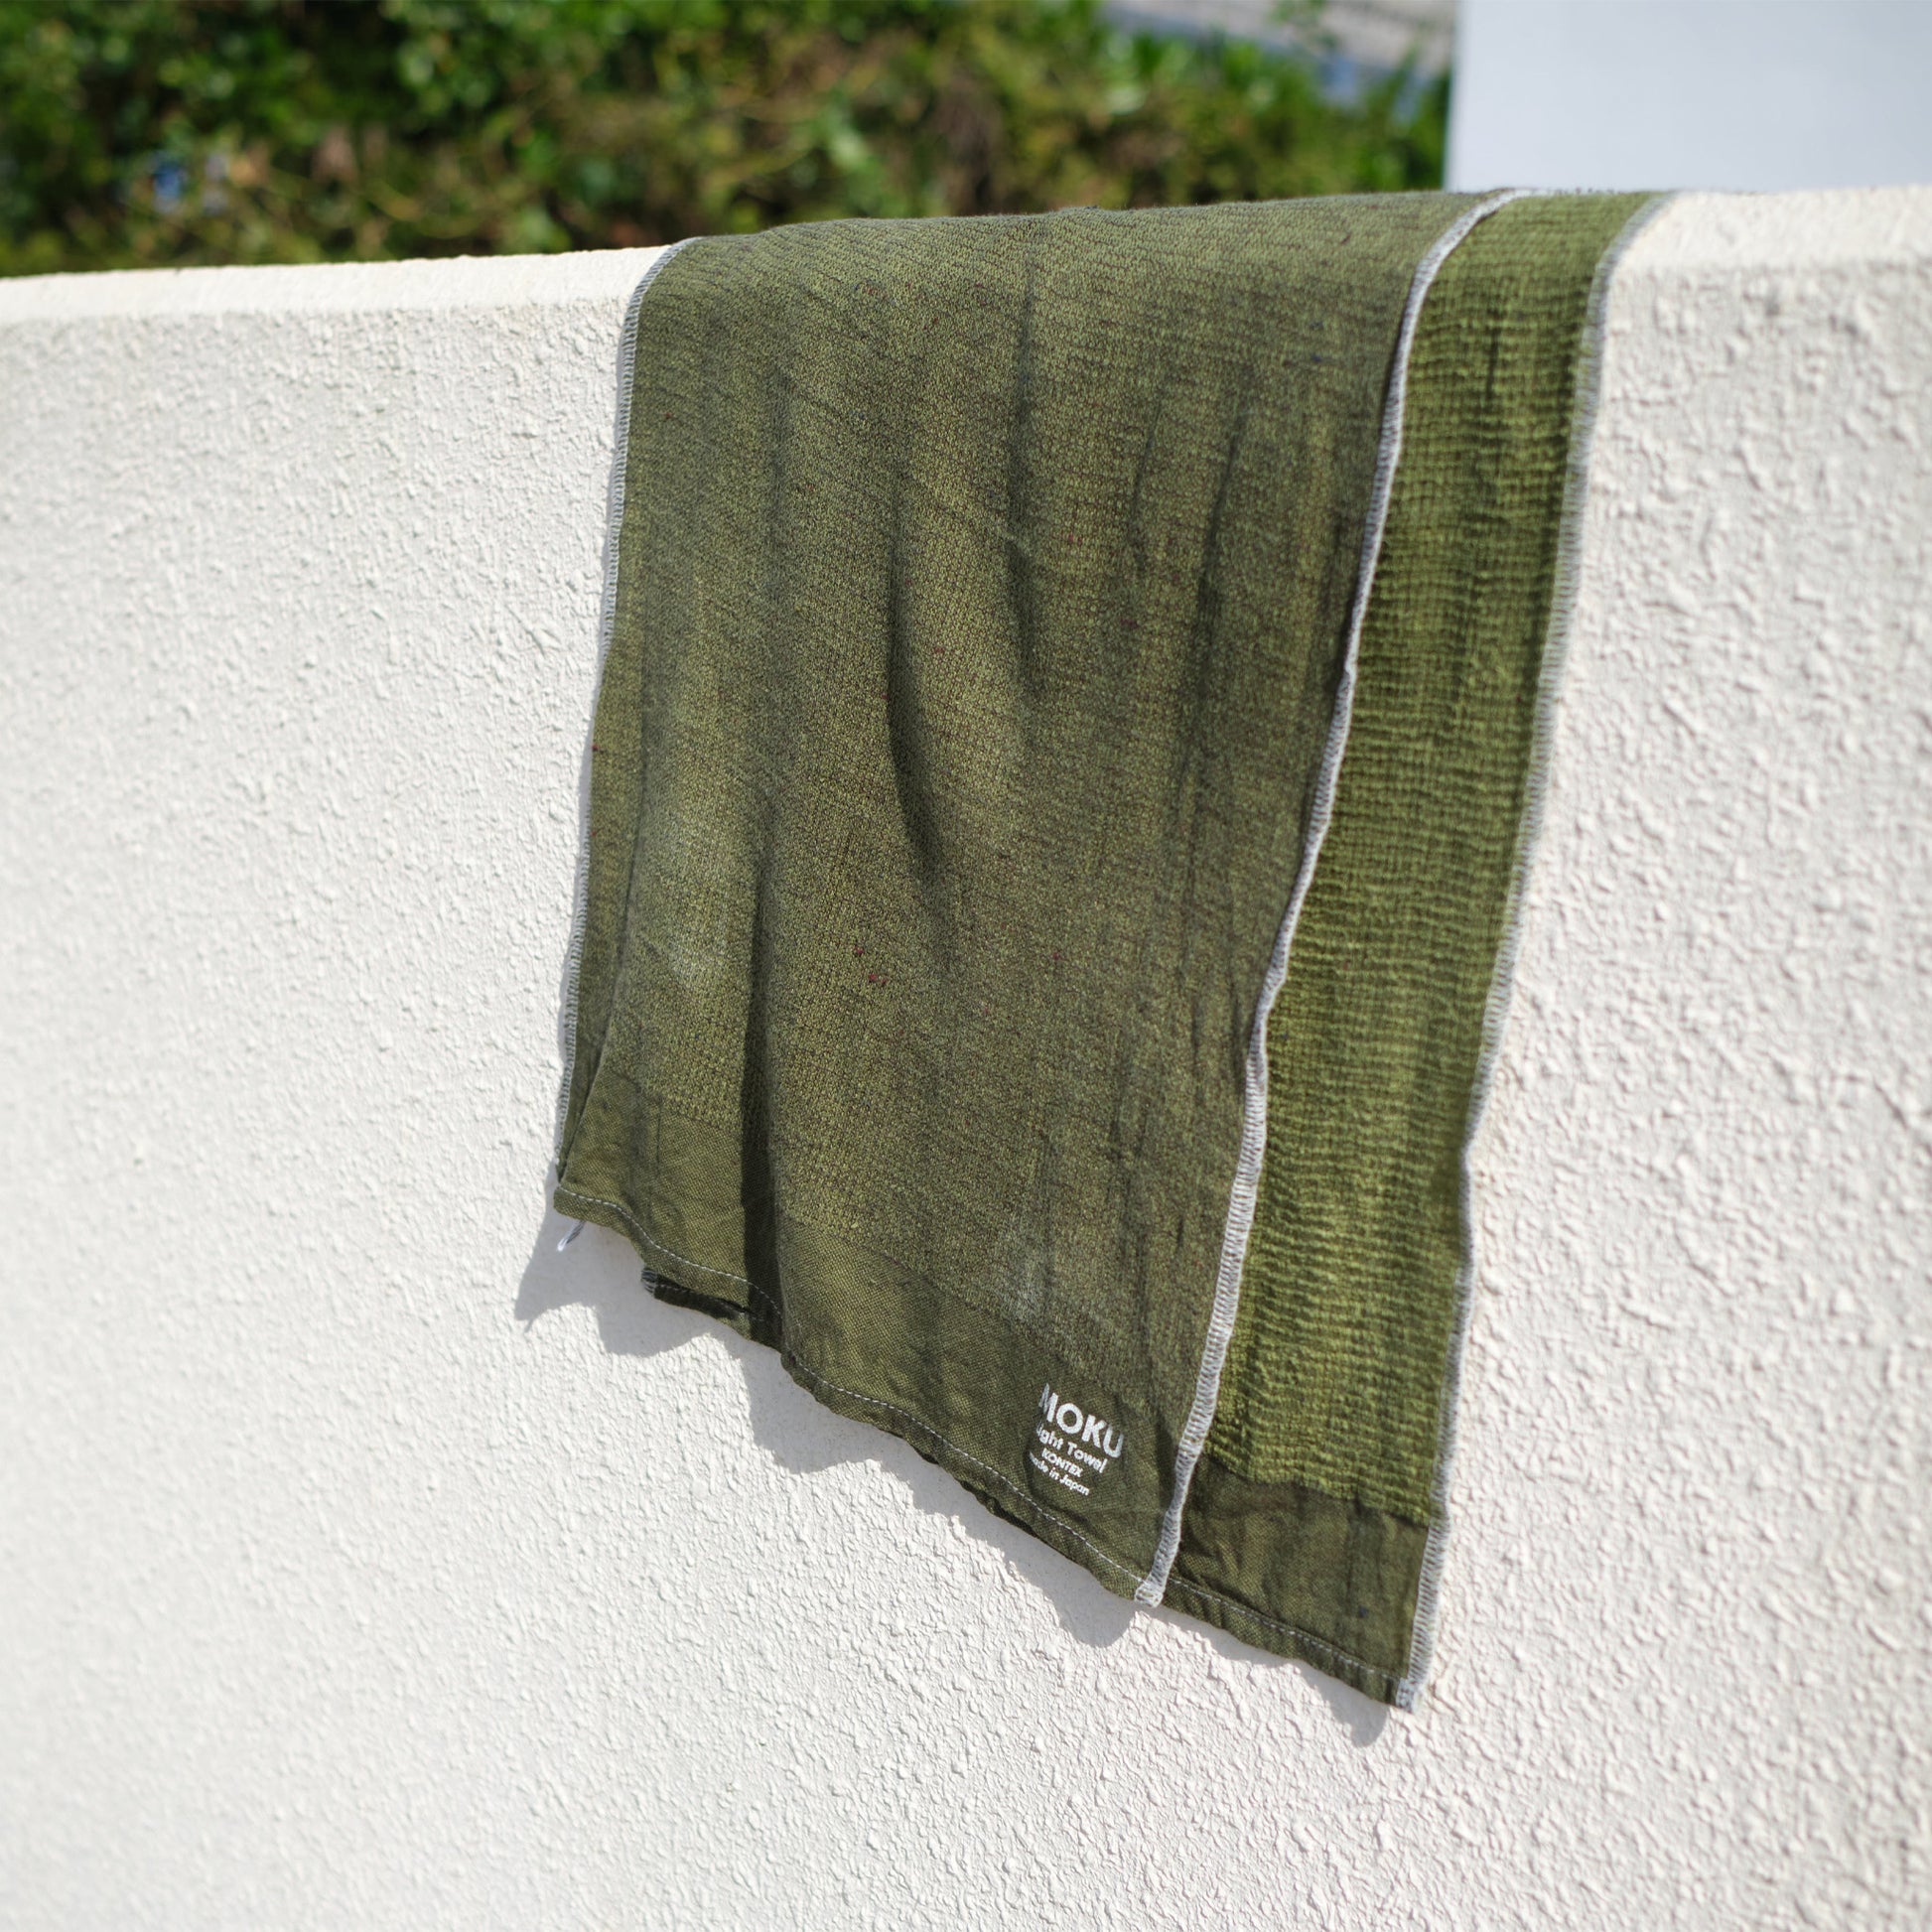 Moku Towel, Large – Moth